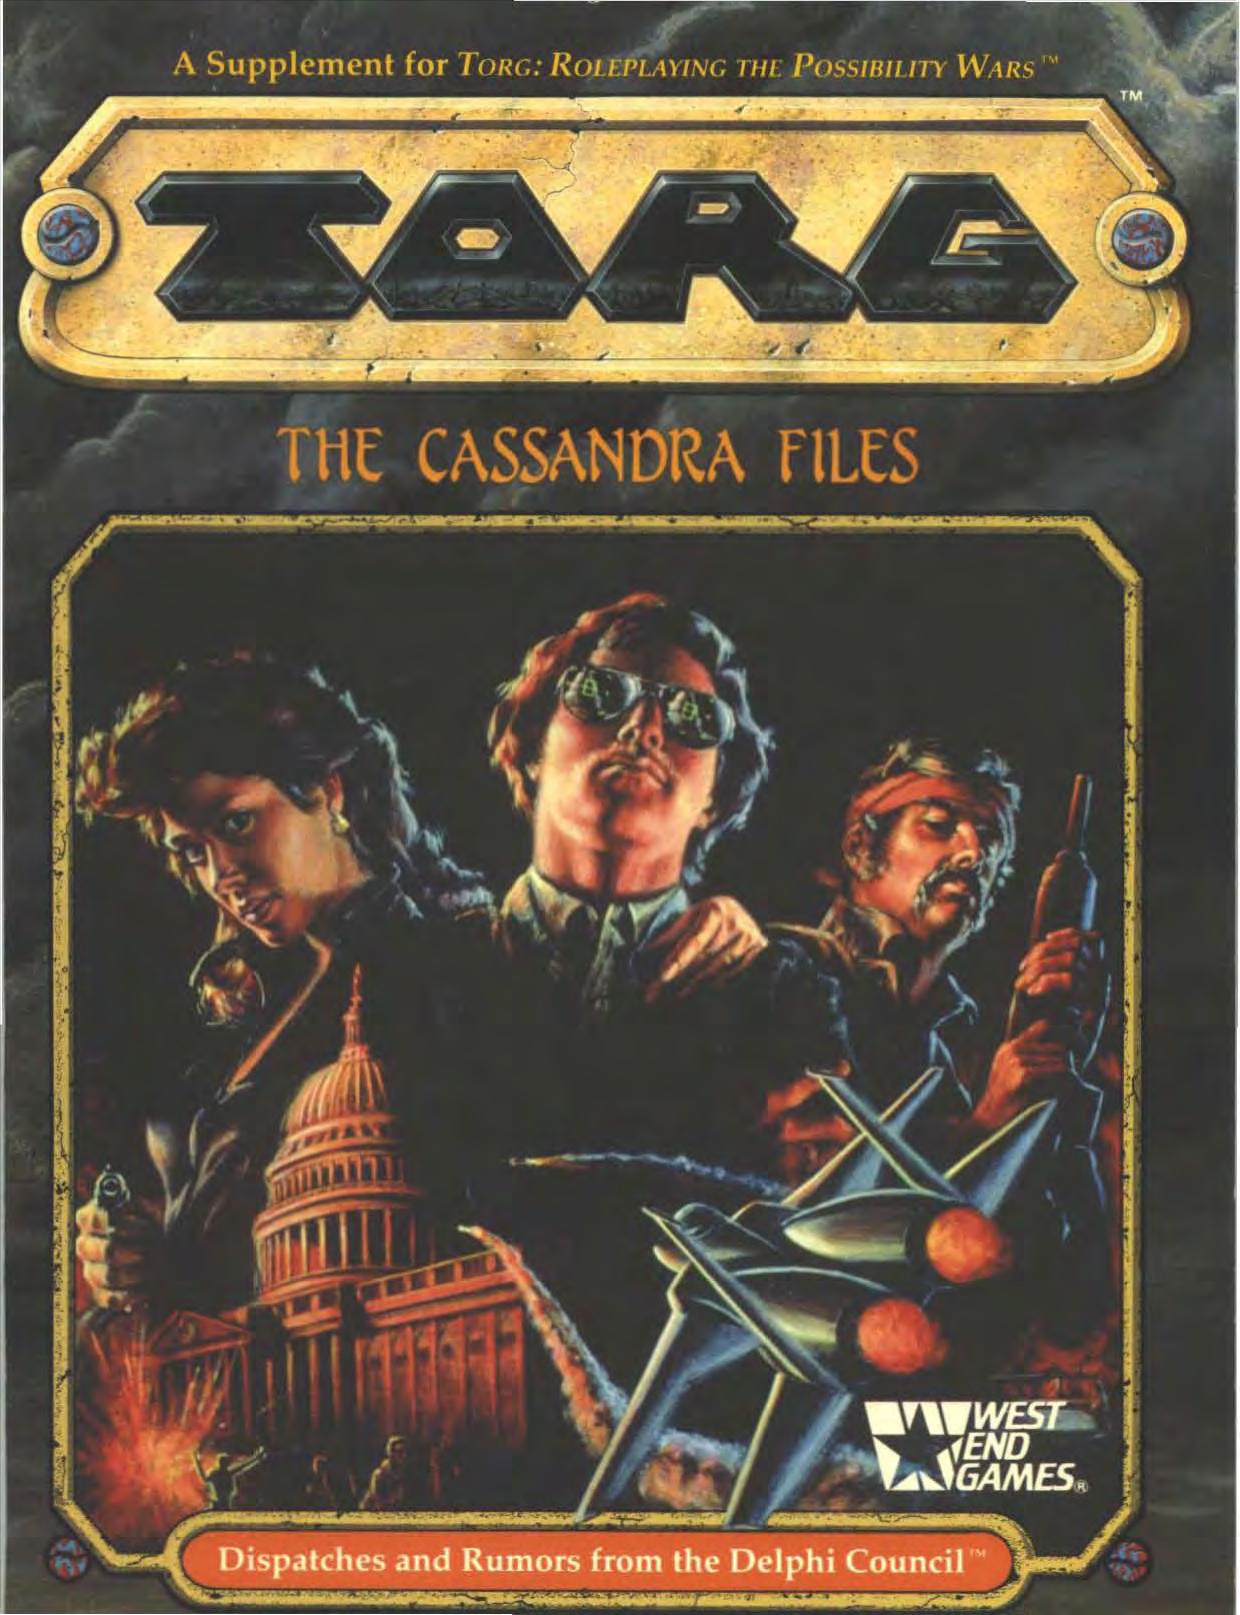 The Cassandra Files